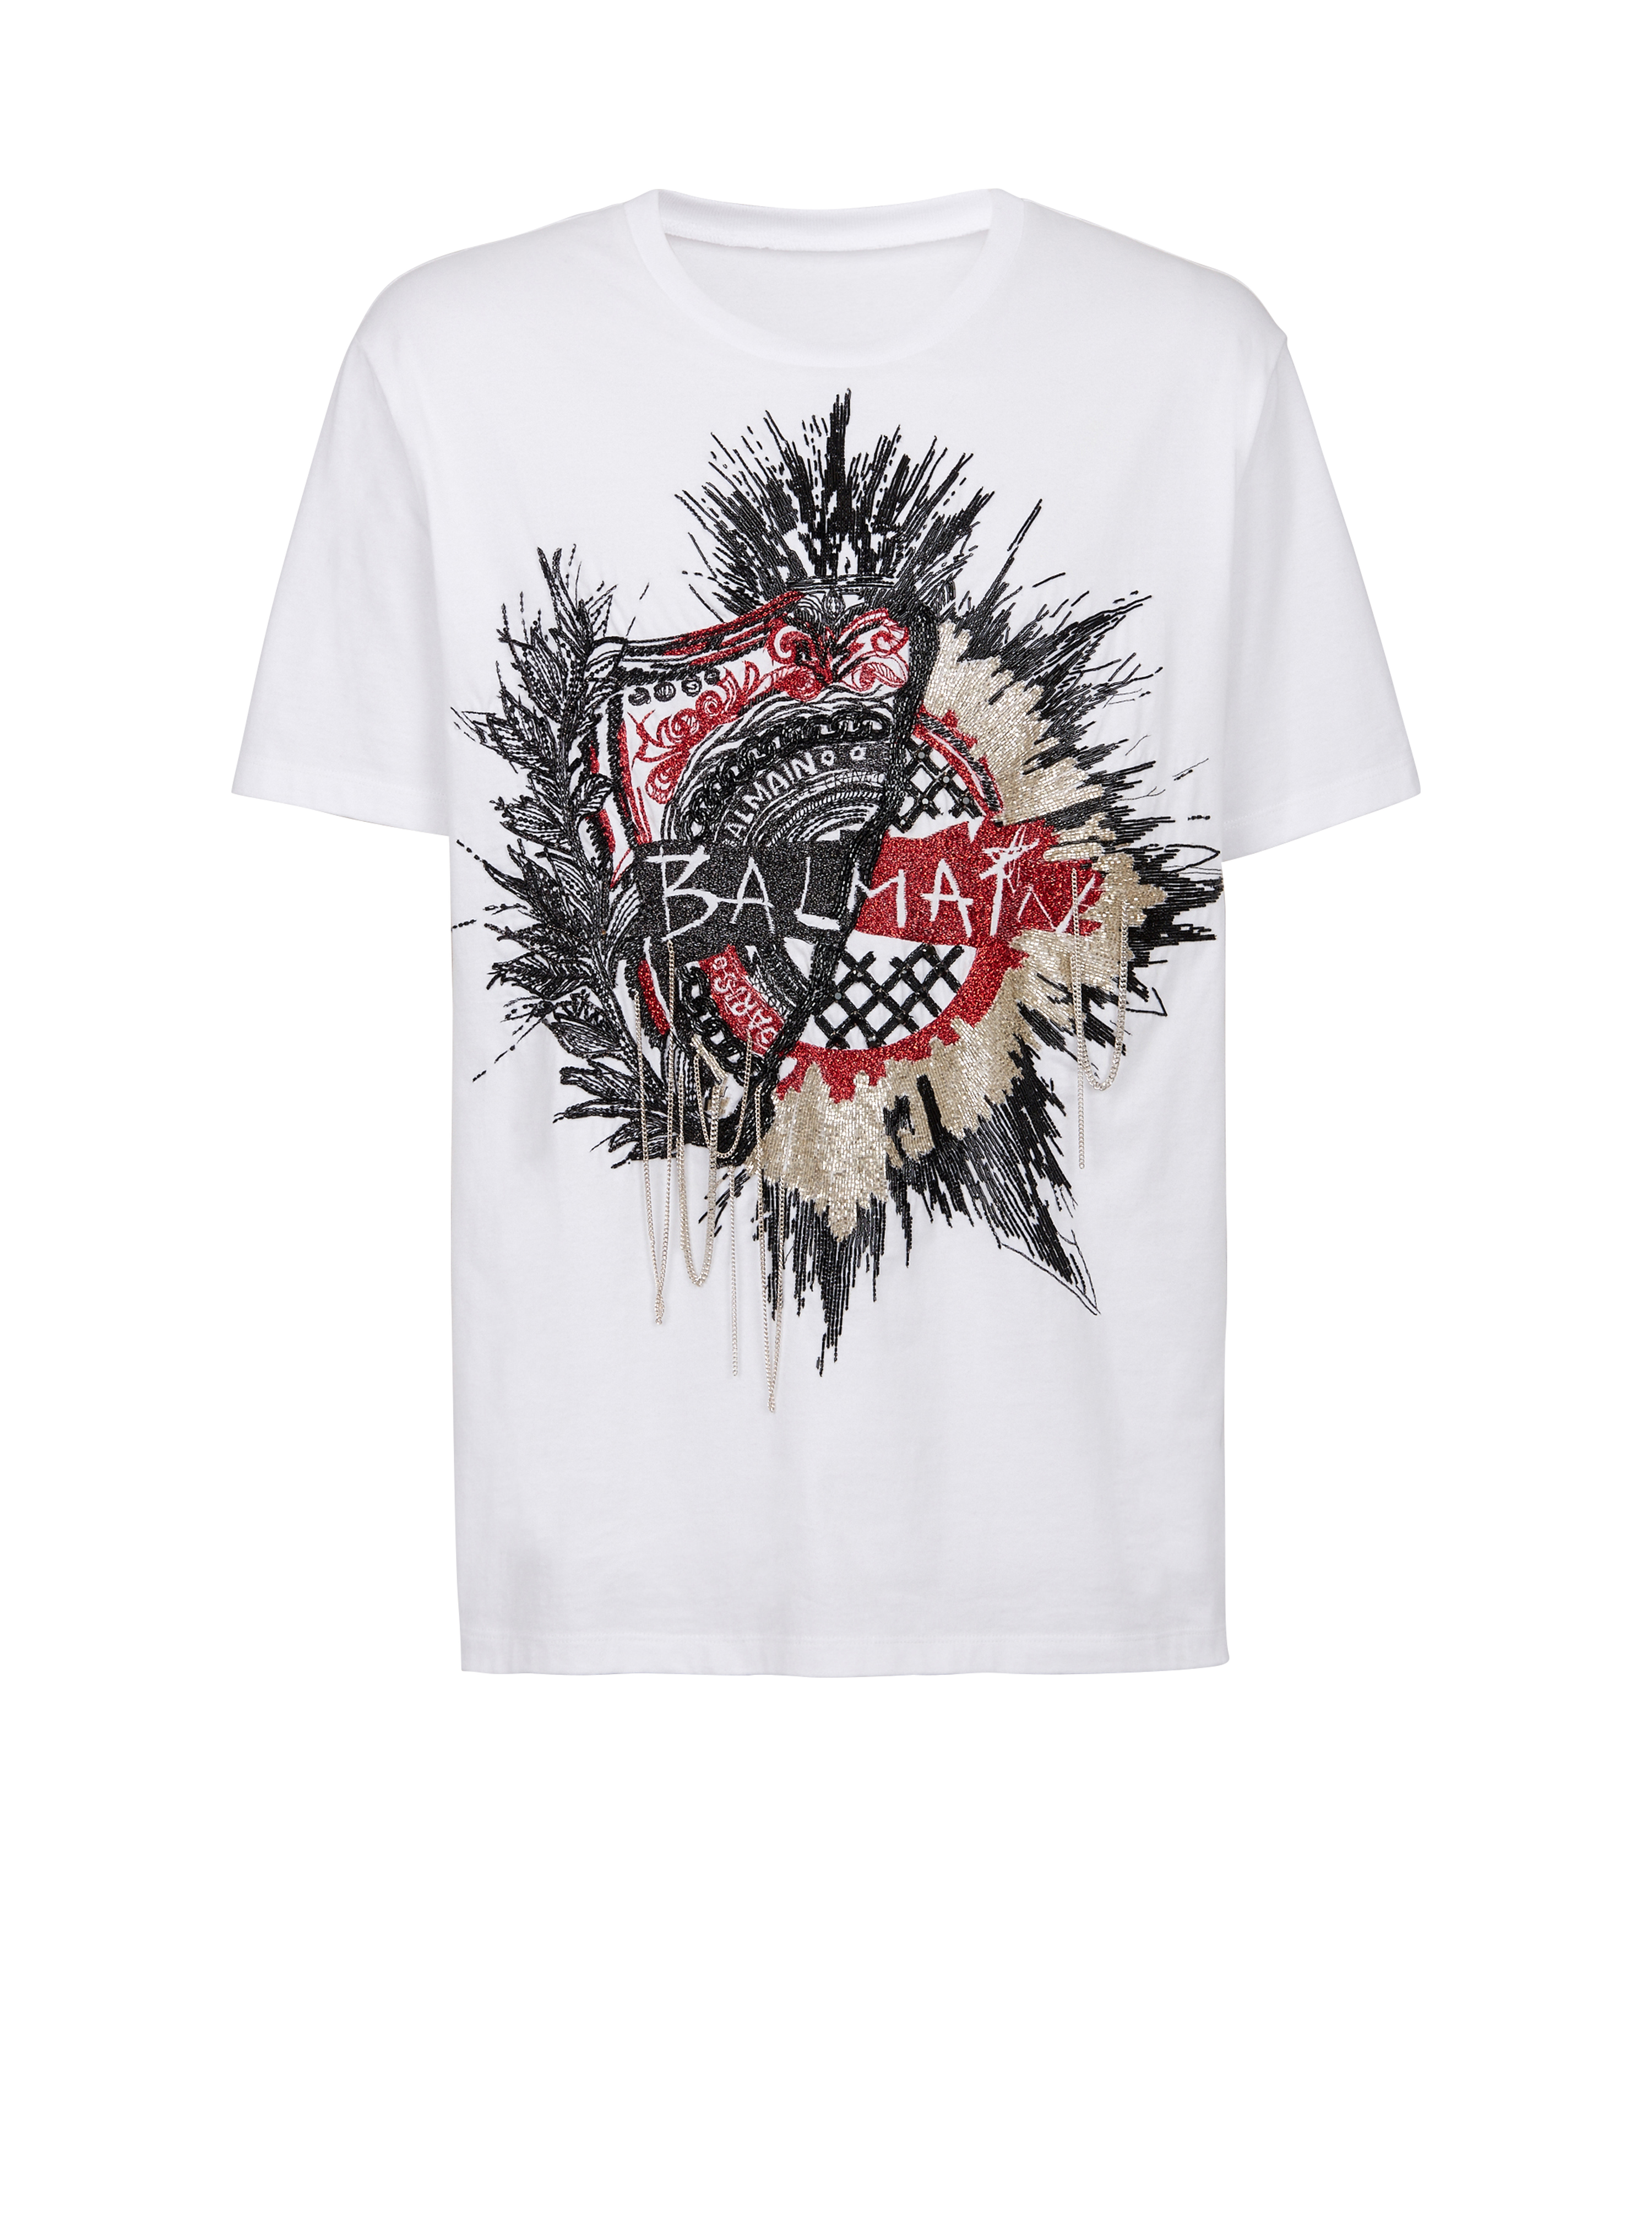 Oversized cotton T-shirt with embroidered Balmain logo, white